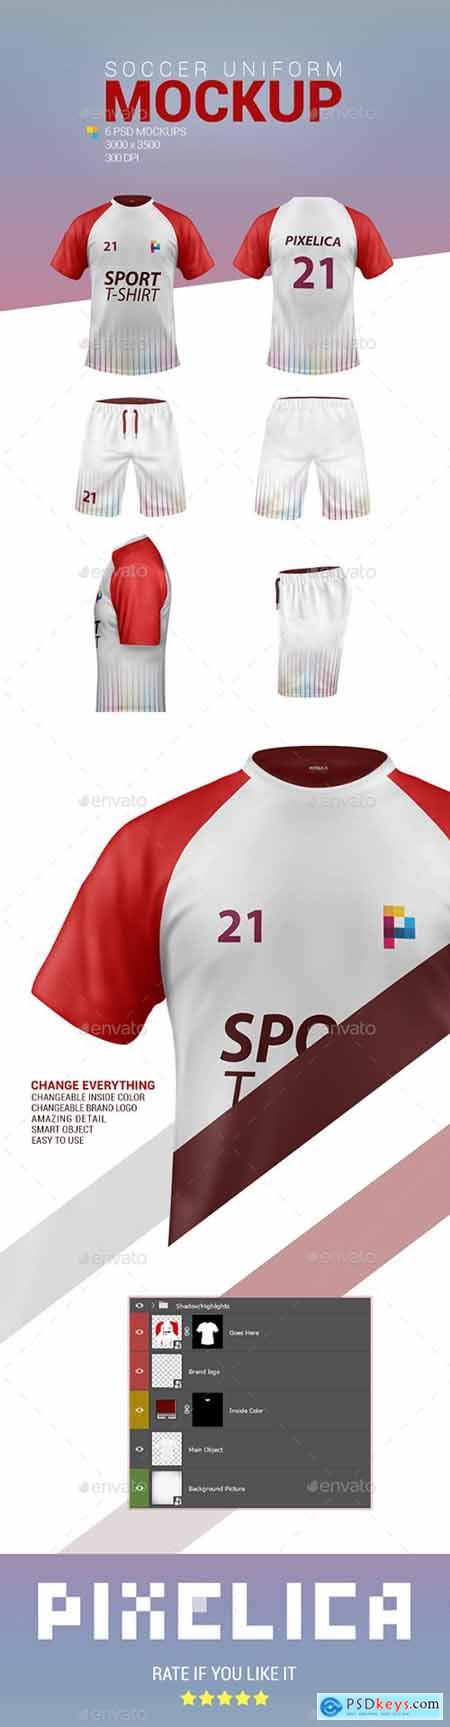 Download Soccer Football Uniform Mockup 22914979 Free Download Photoshop Vector Stock Image Via Torrent Zippyshare From Psdkeys Com